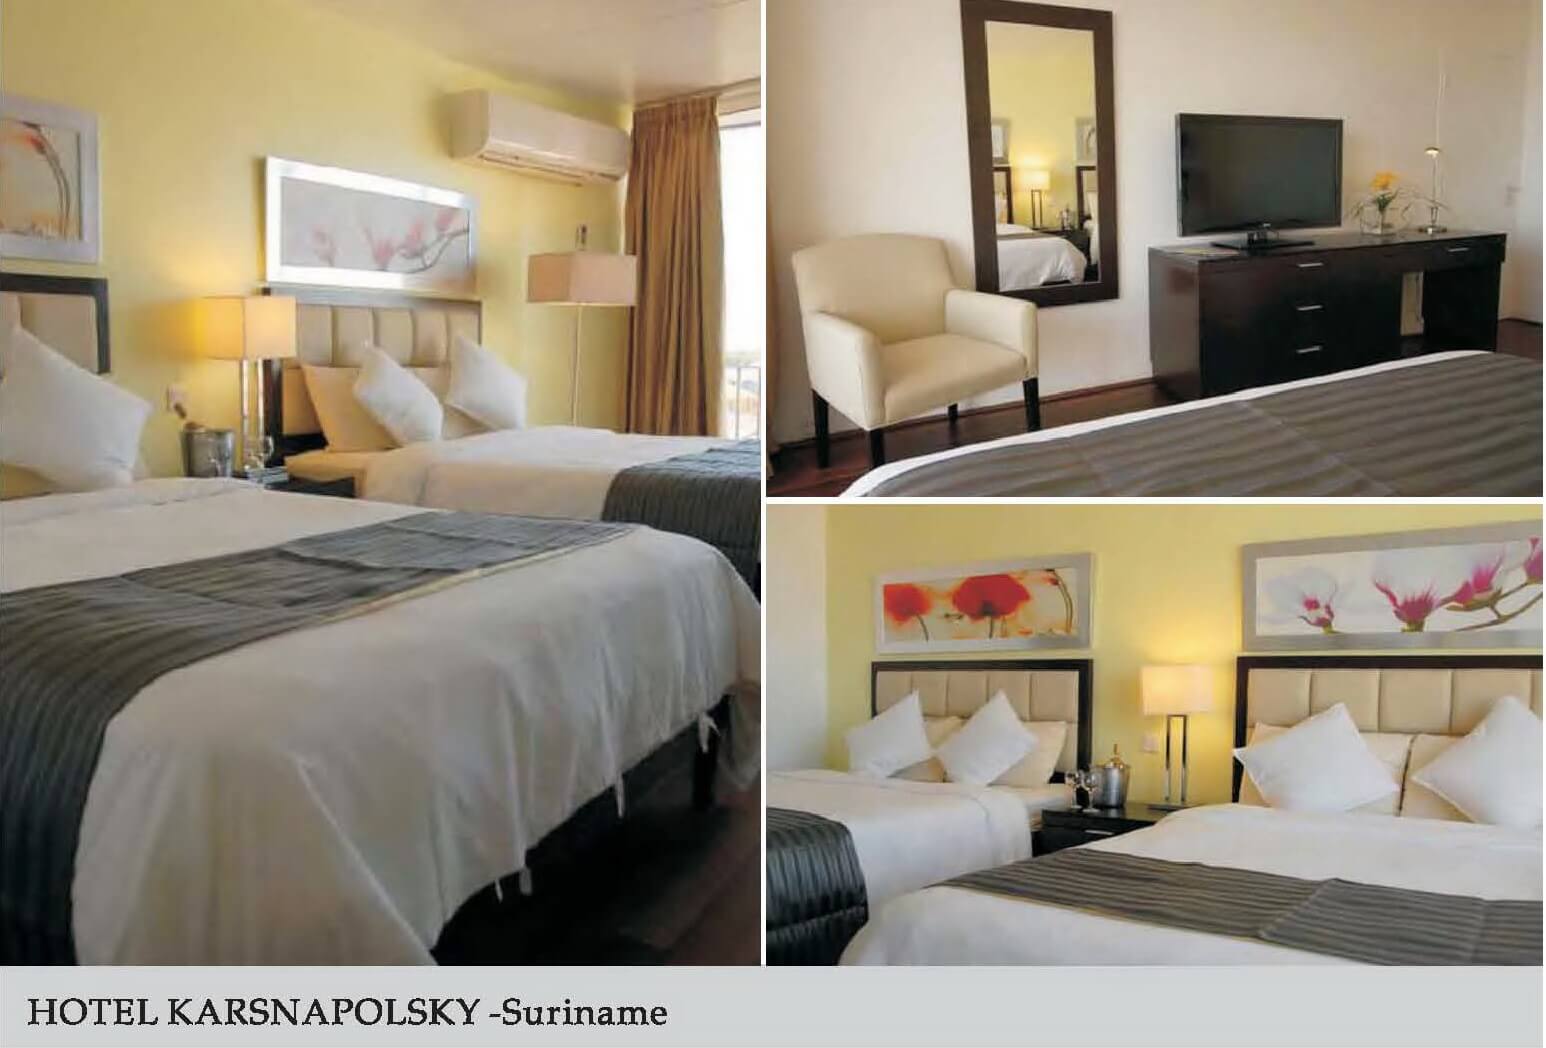 Hotel-Karsnapolsky-Suriname